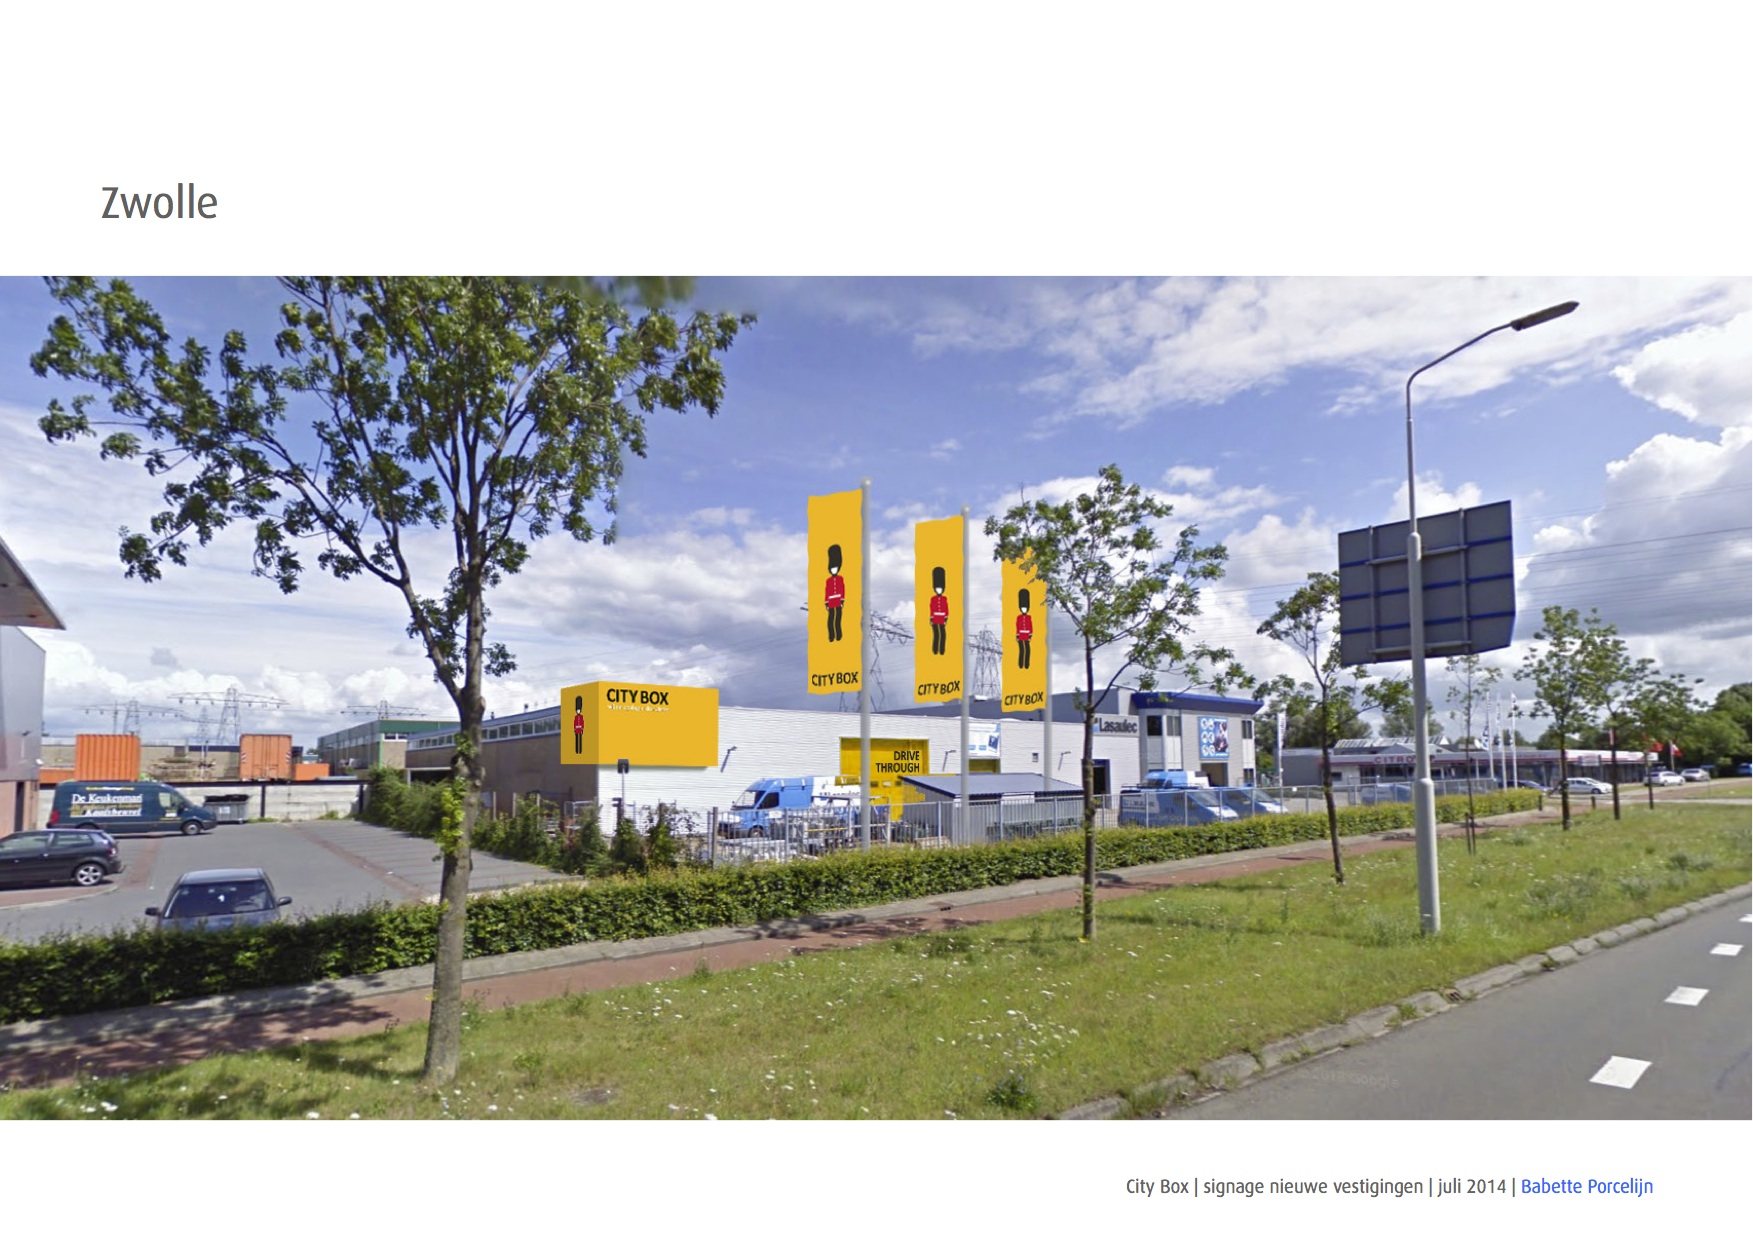 De nieuwe City Box-vestiging in Zwolle (artist impression). Bron: FranchiseFormules.NL